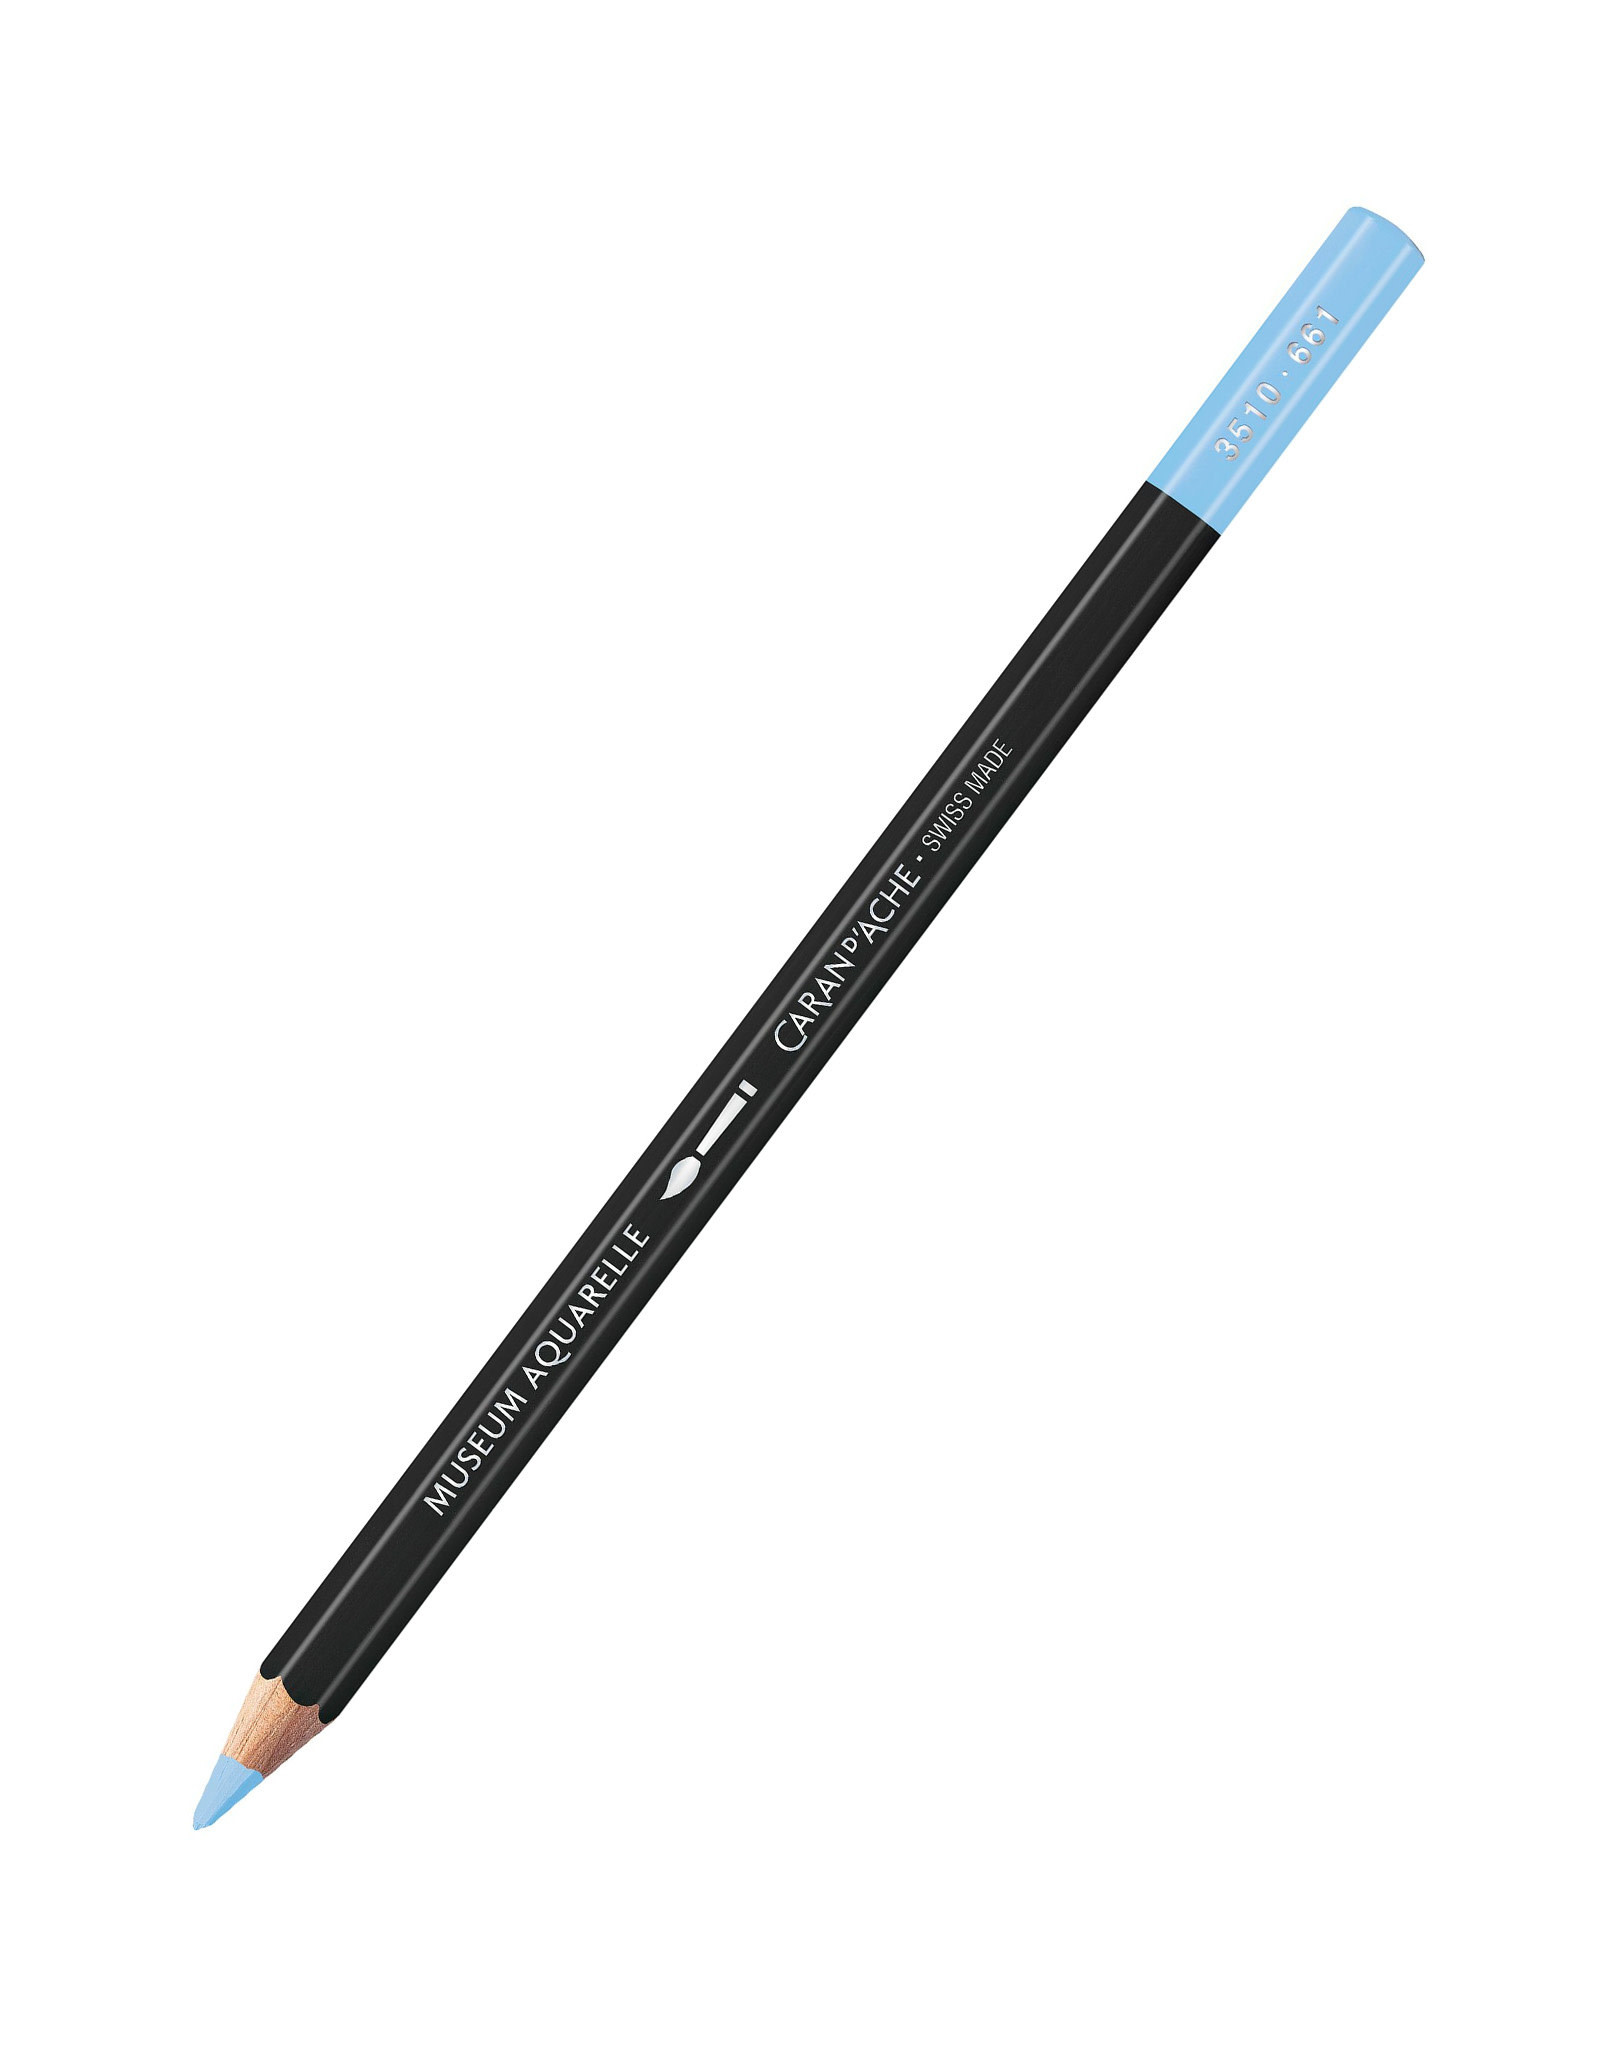 Caran d'Ache Caran D'Ache Museum Aquarelle Colored Pencils, Light Cobalt Blue